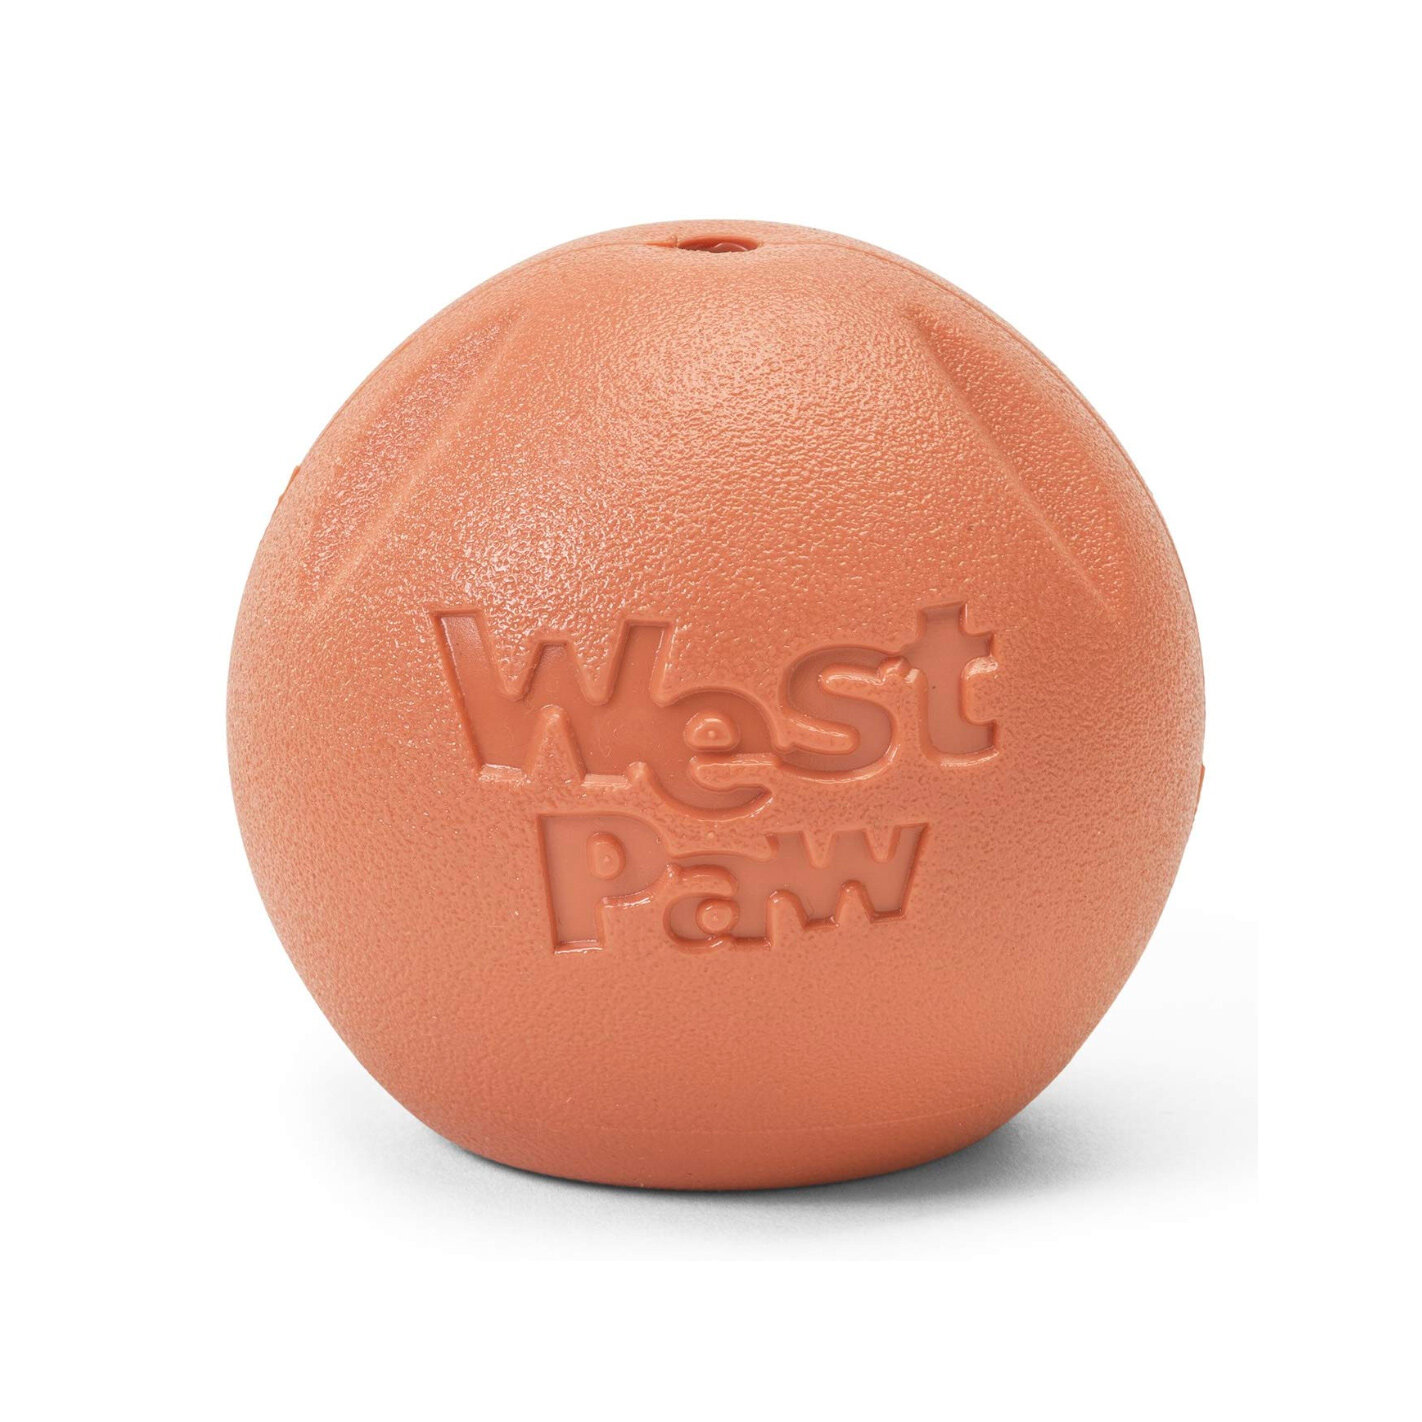 West Paw ball